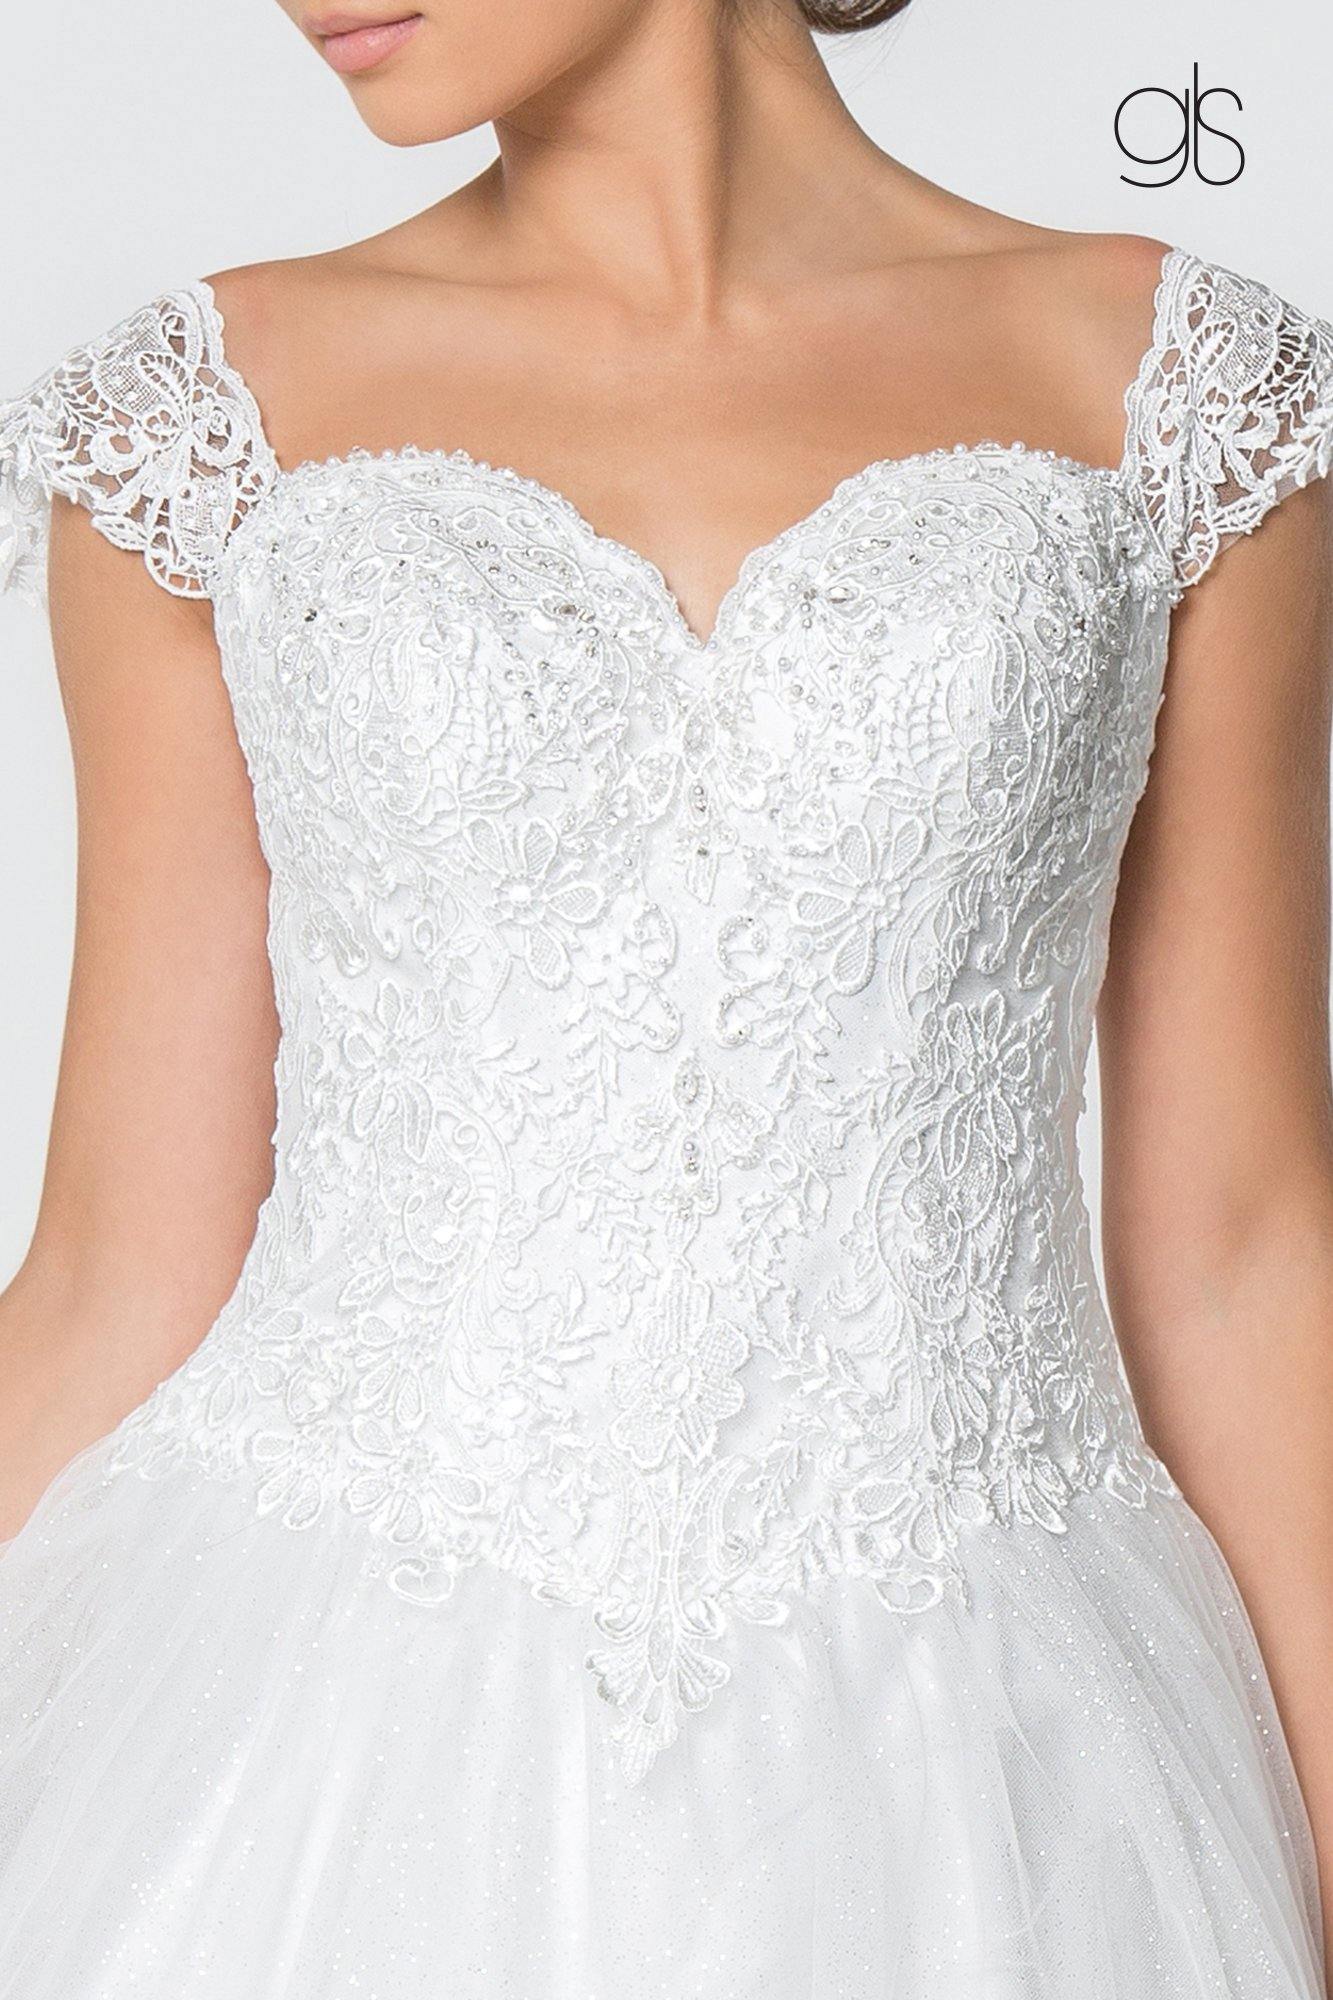 Jewel and Lace Embellished Glitter Mesh Long Wedding Gown - The Dress Outlet Elizabeth K